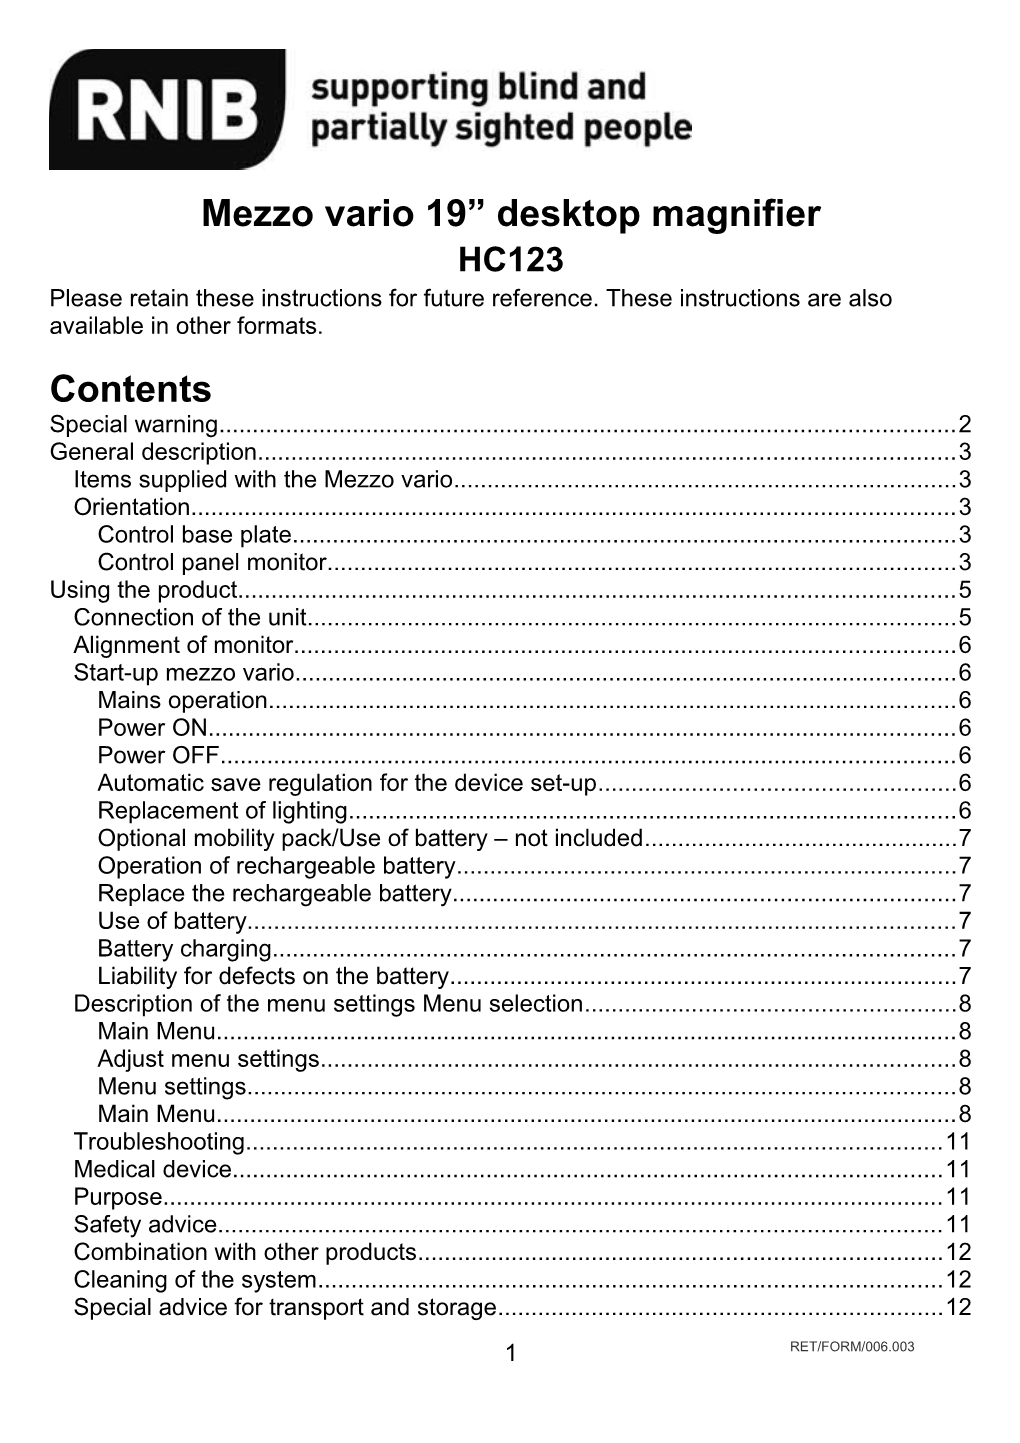 Mezzo Vario 19 Desktop Magnifier